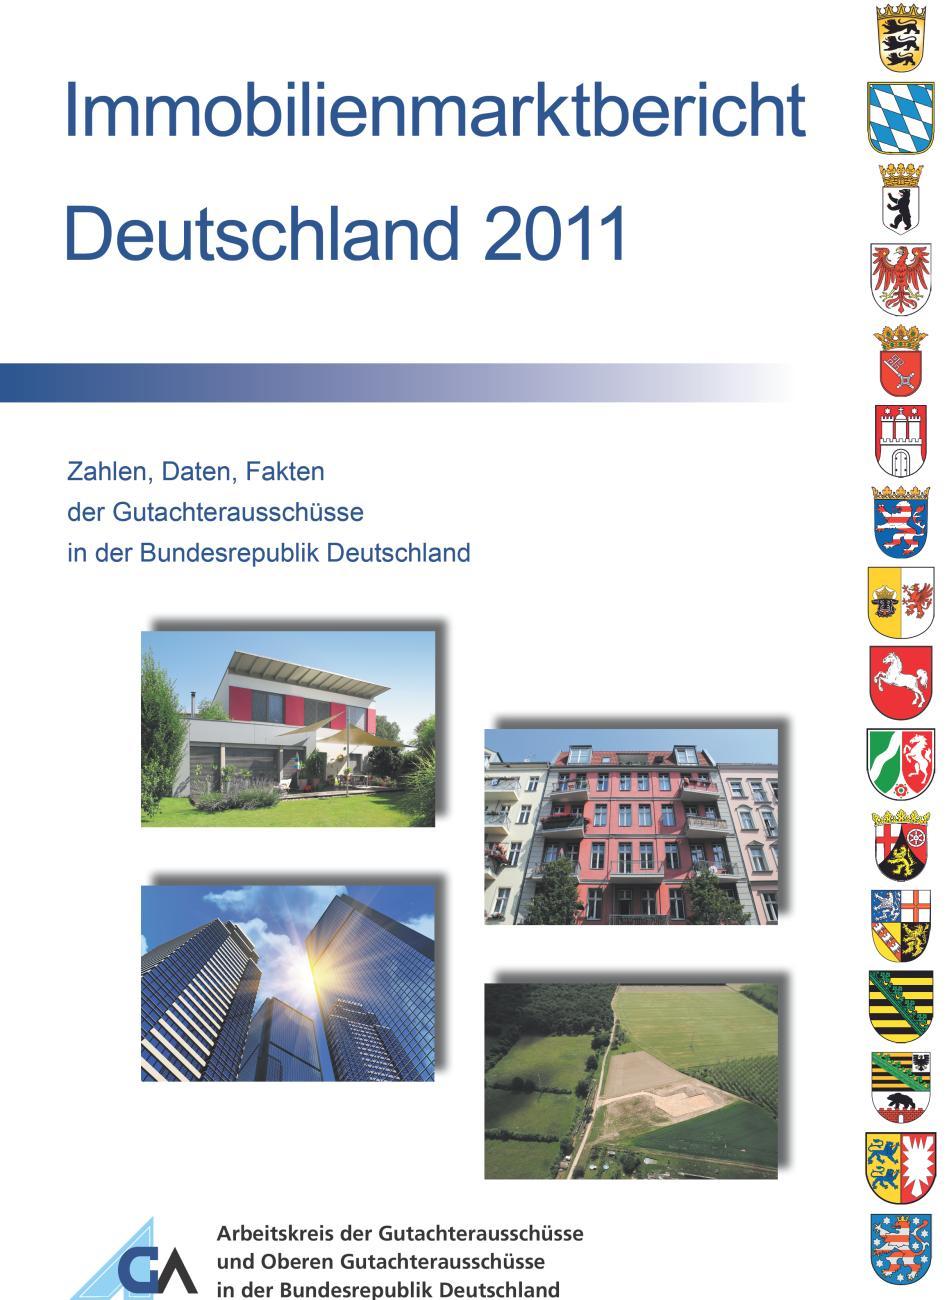 Market Transparency GRETI Germany 2012: No. 12.